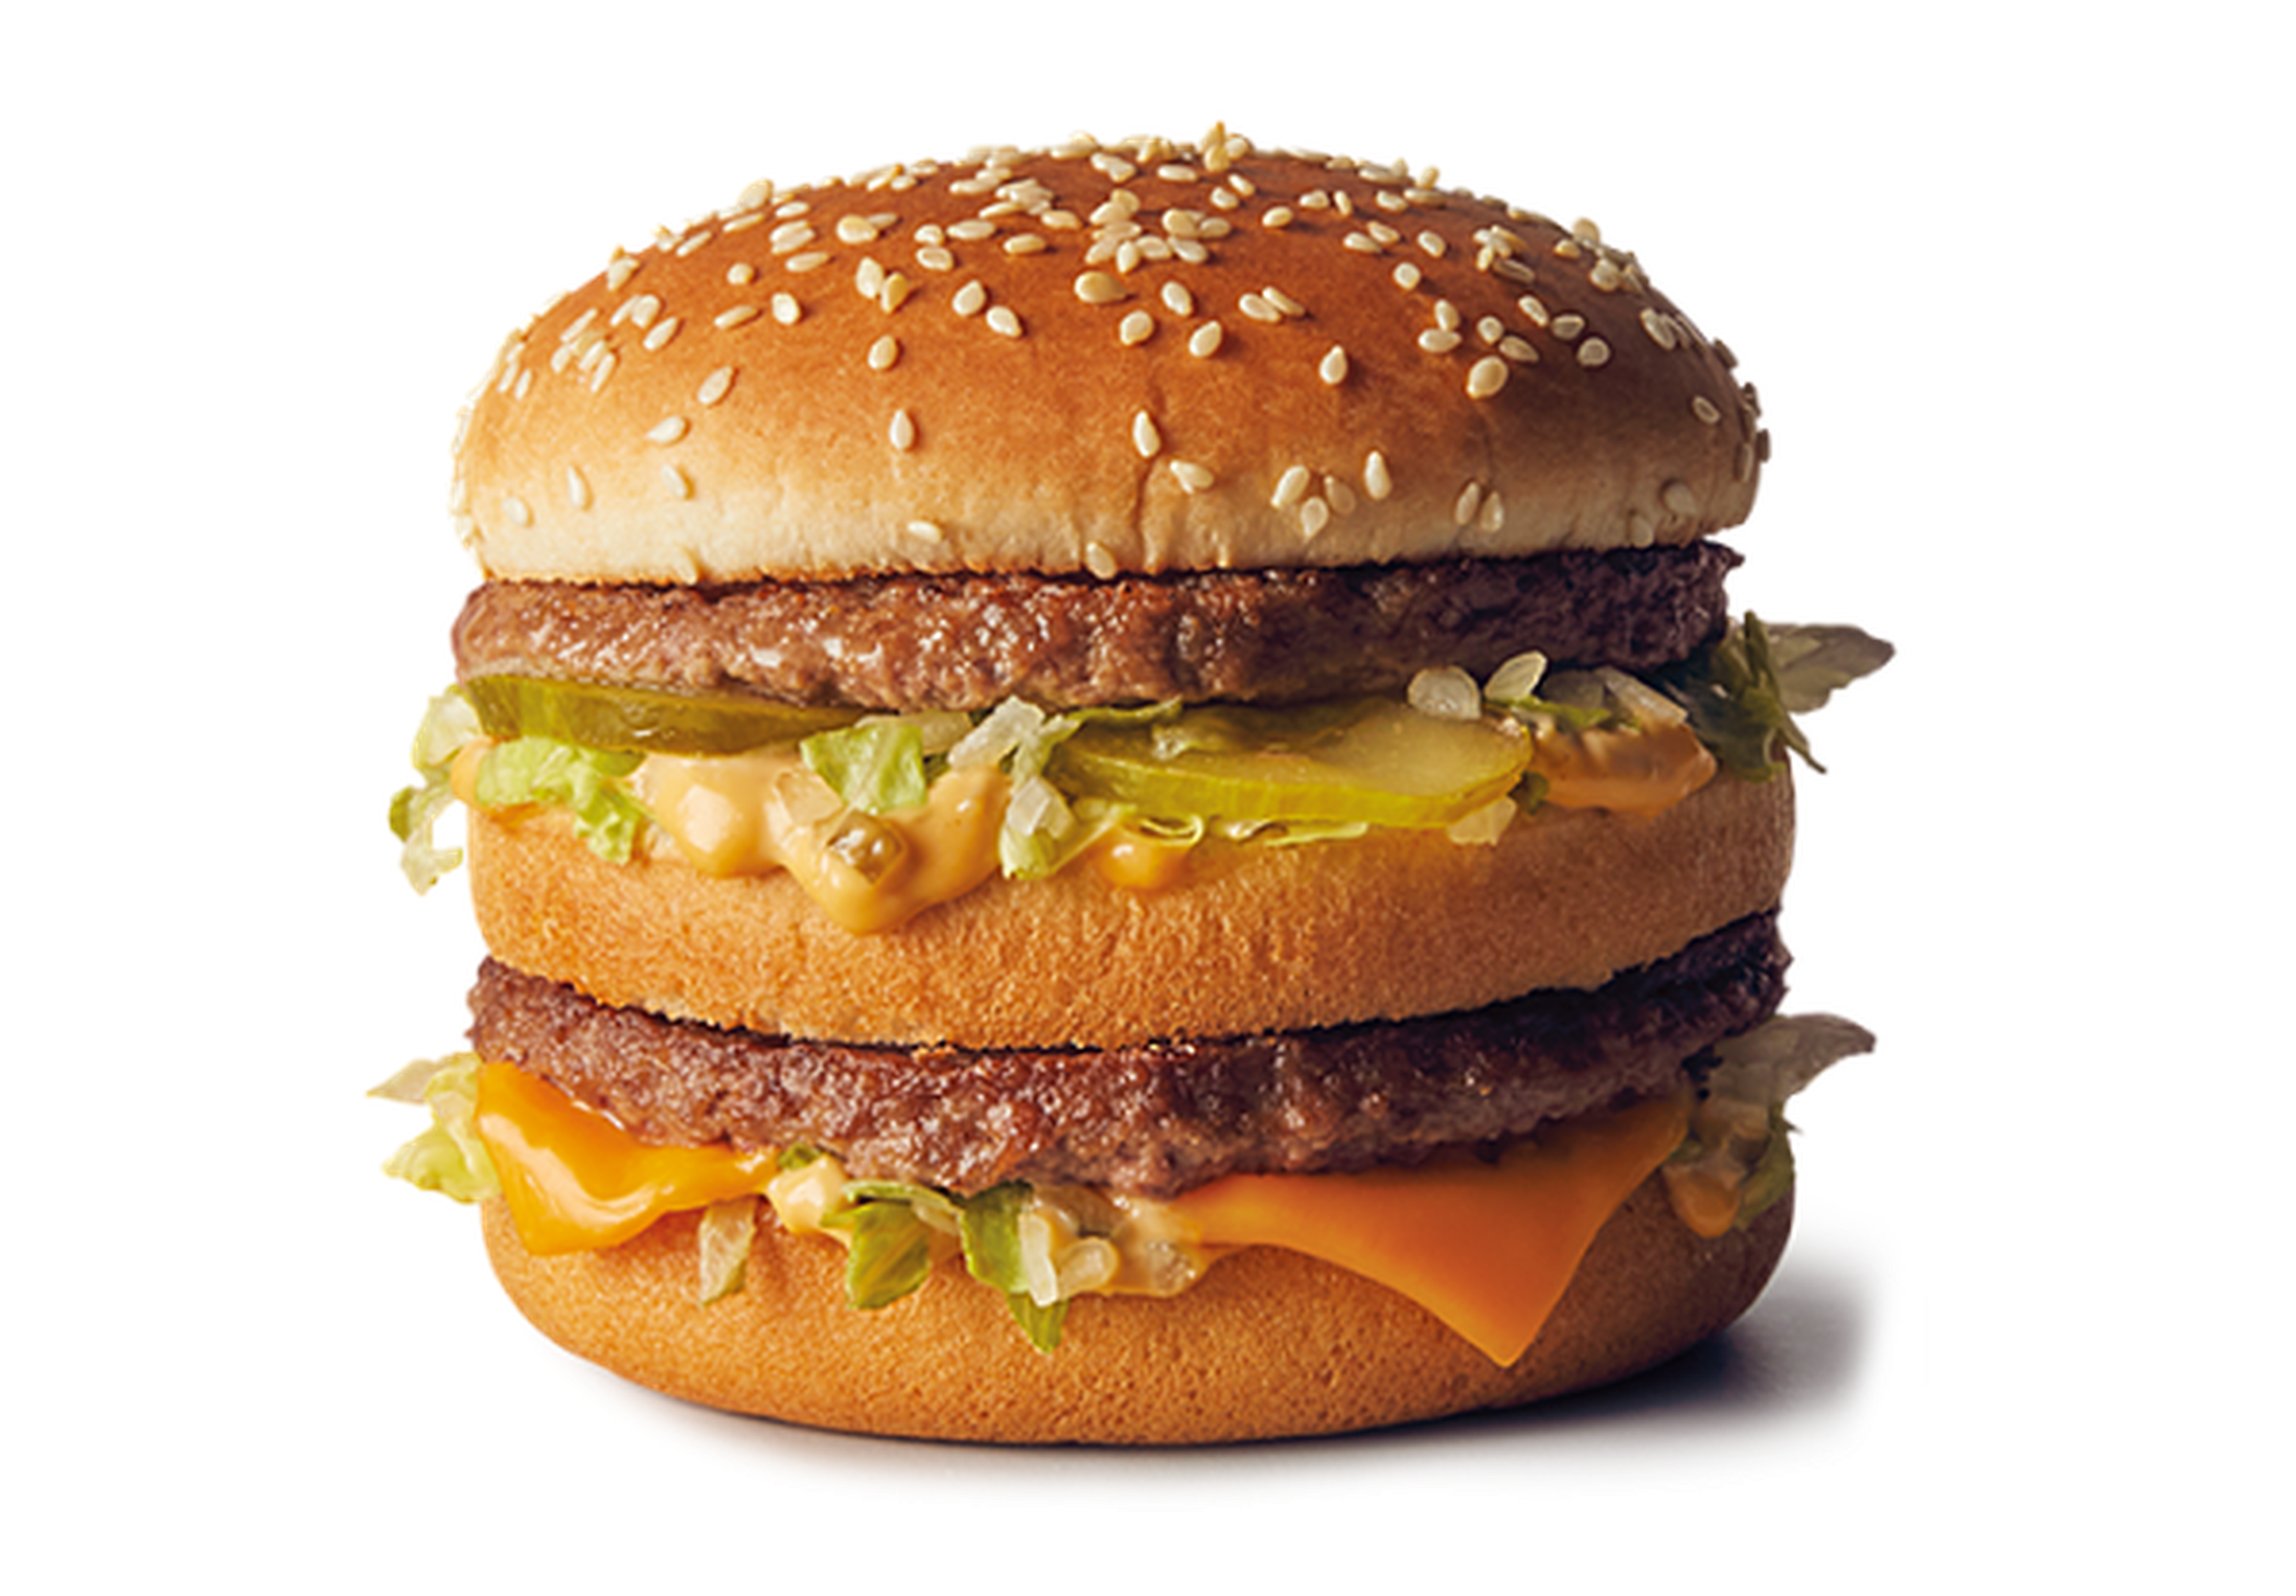 El Big Mac, la hamburguesa más conocida de McDonalds